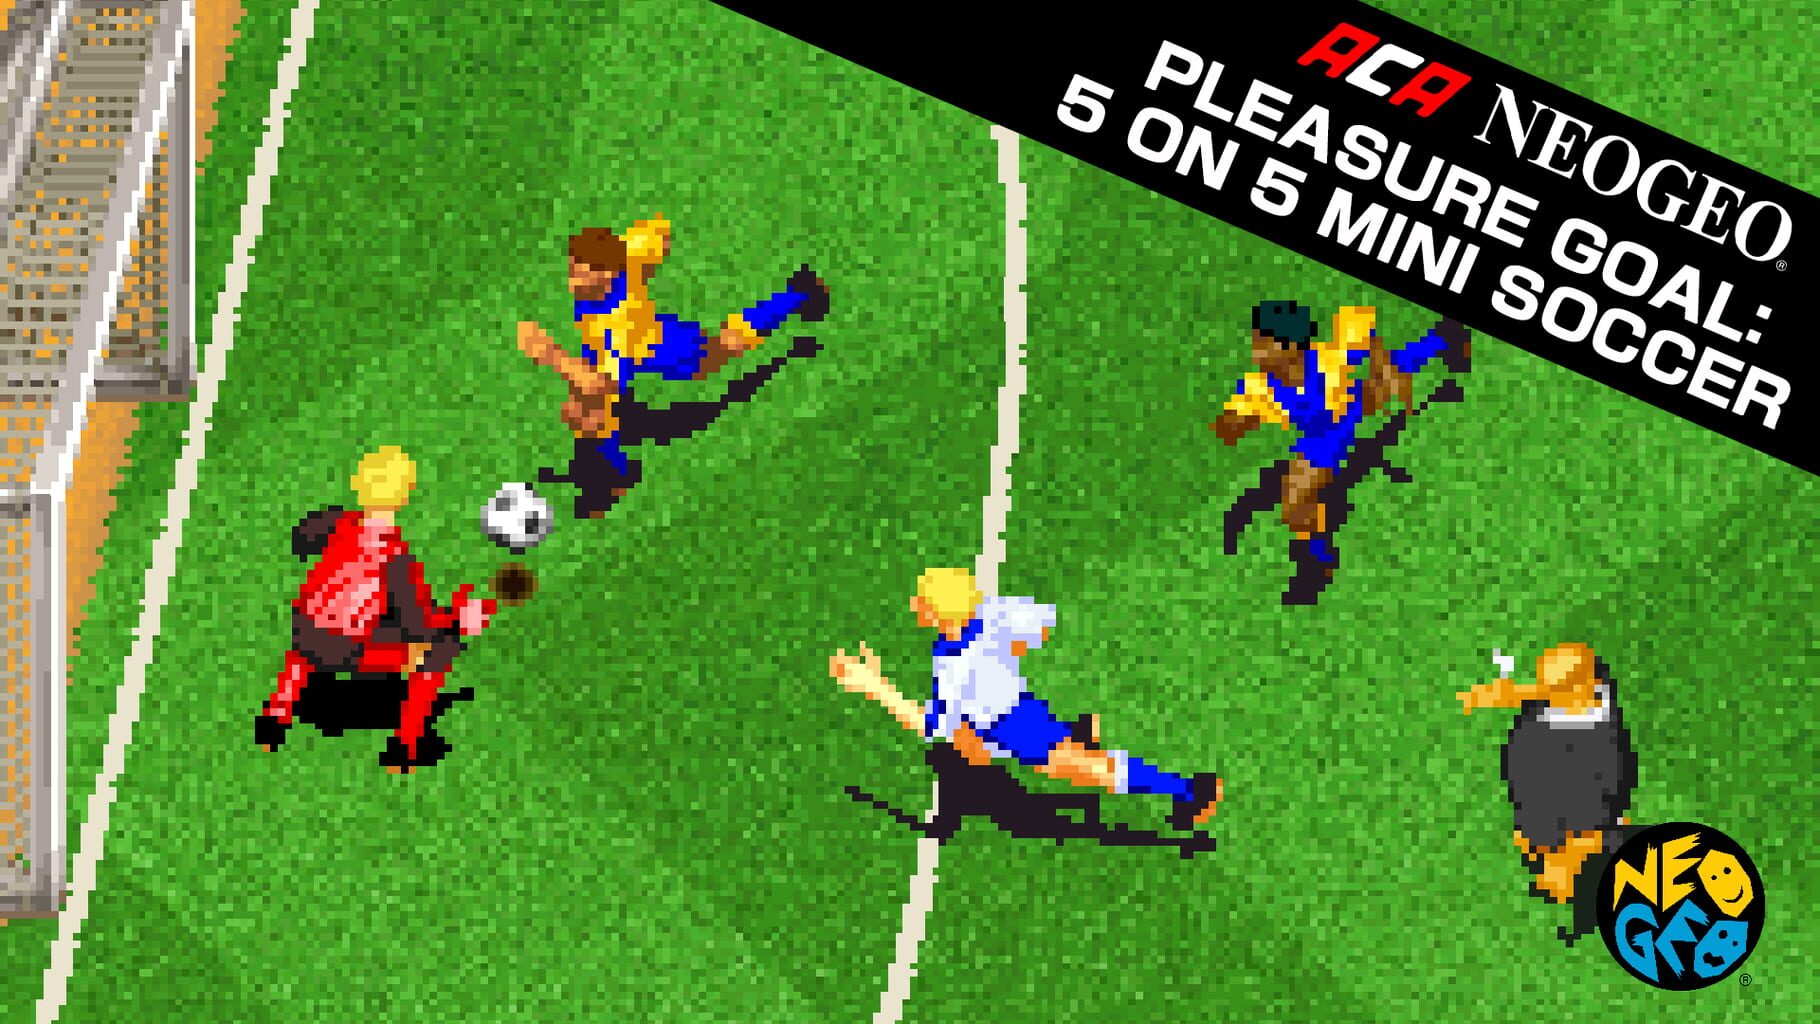 Arte - ACA Neo Geo: Pleasure Goal - 5 on 5 Mini Soccer